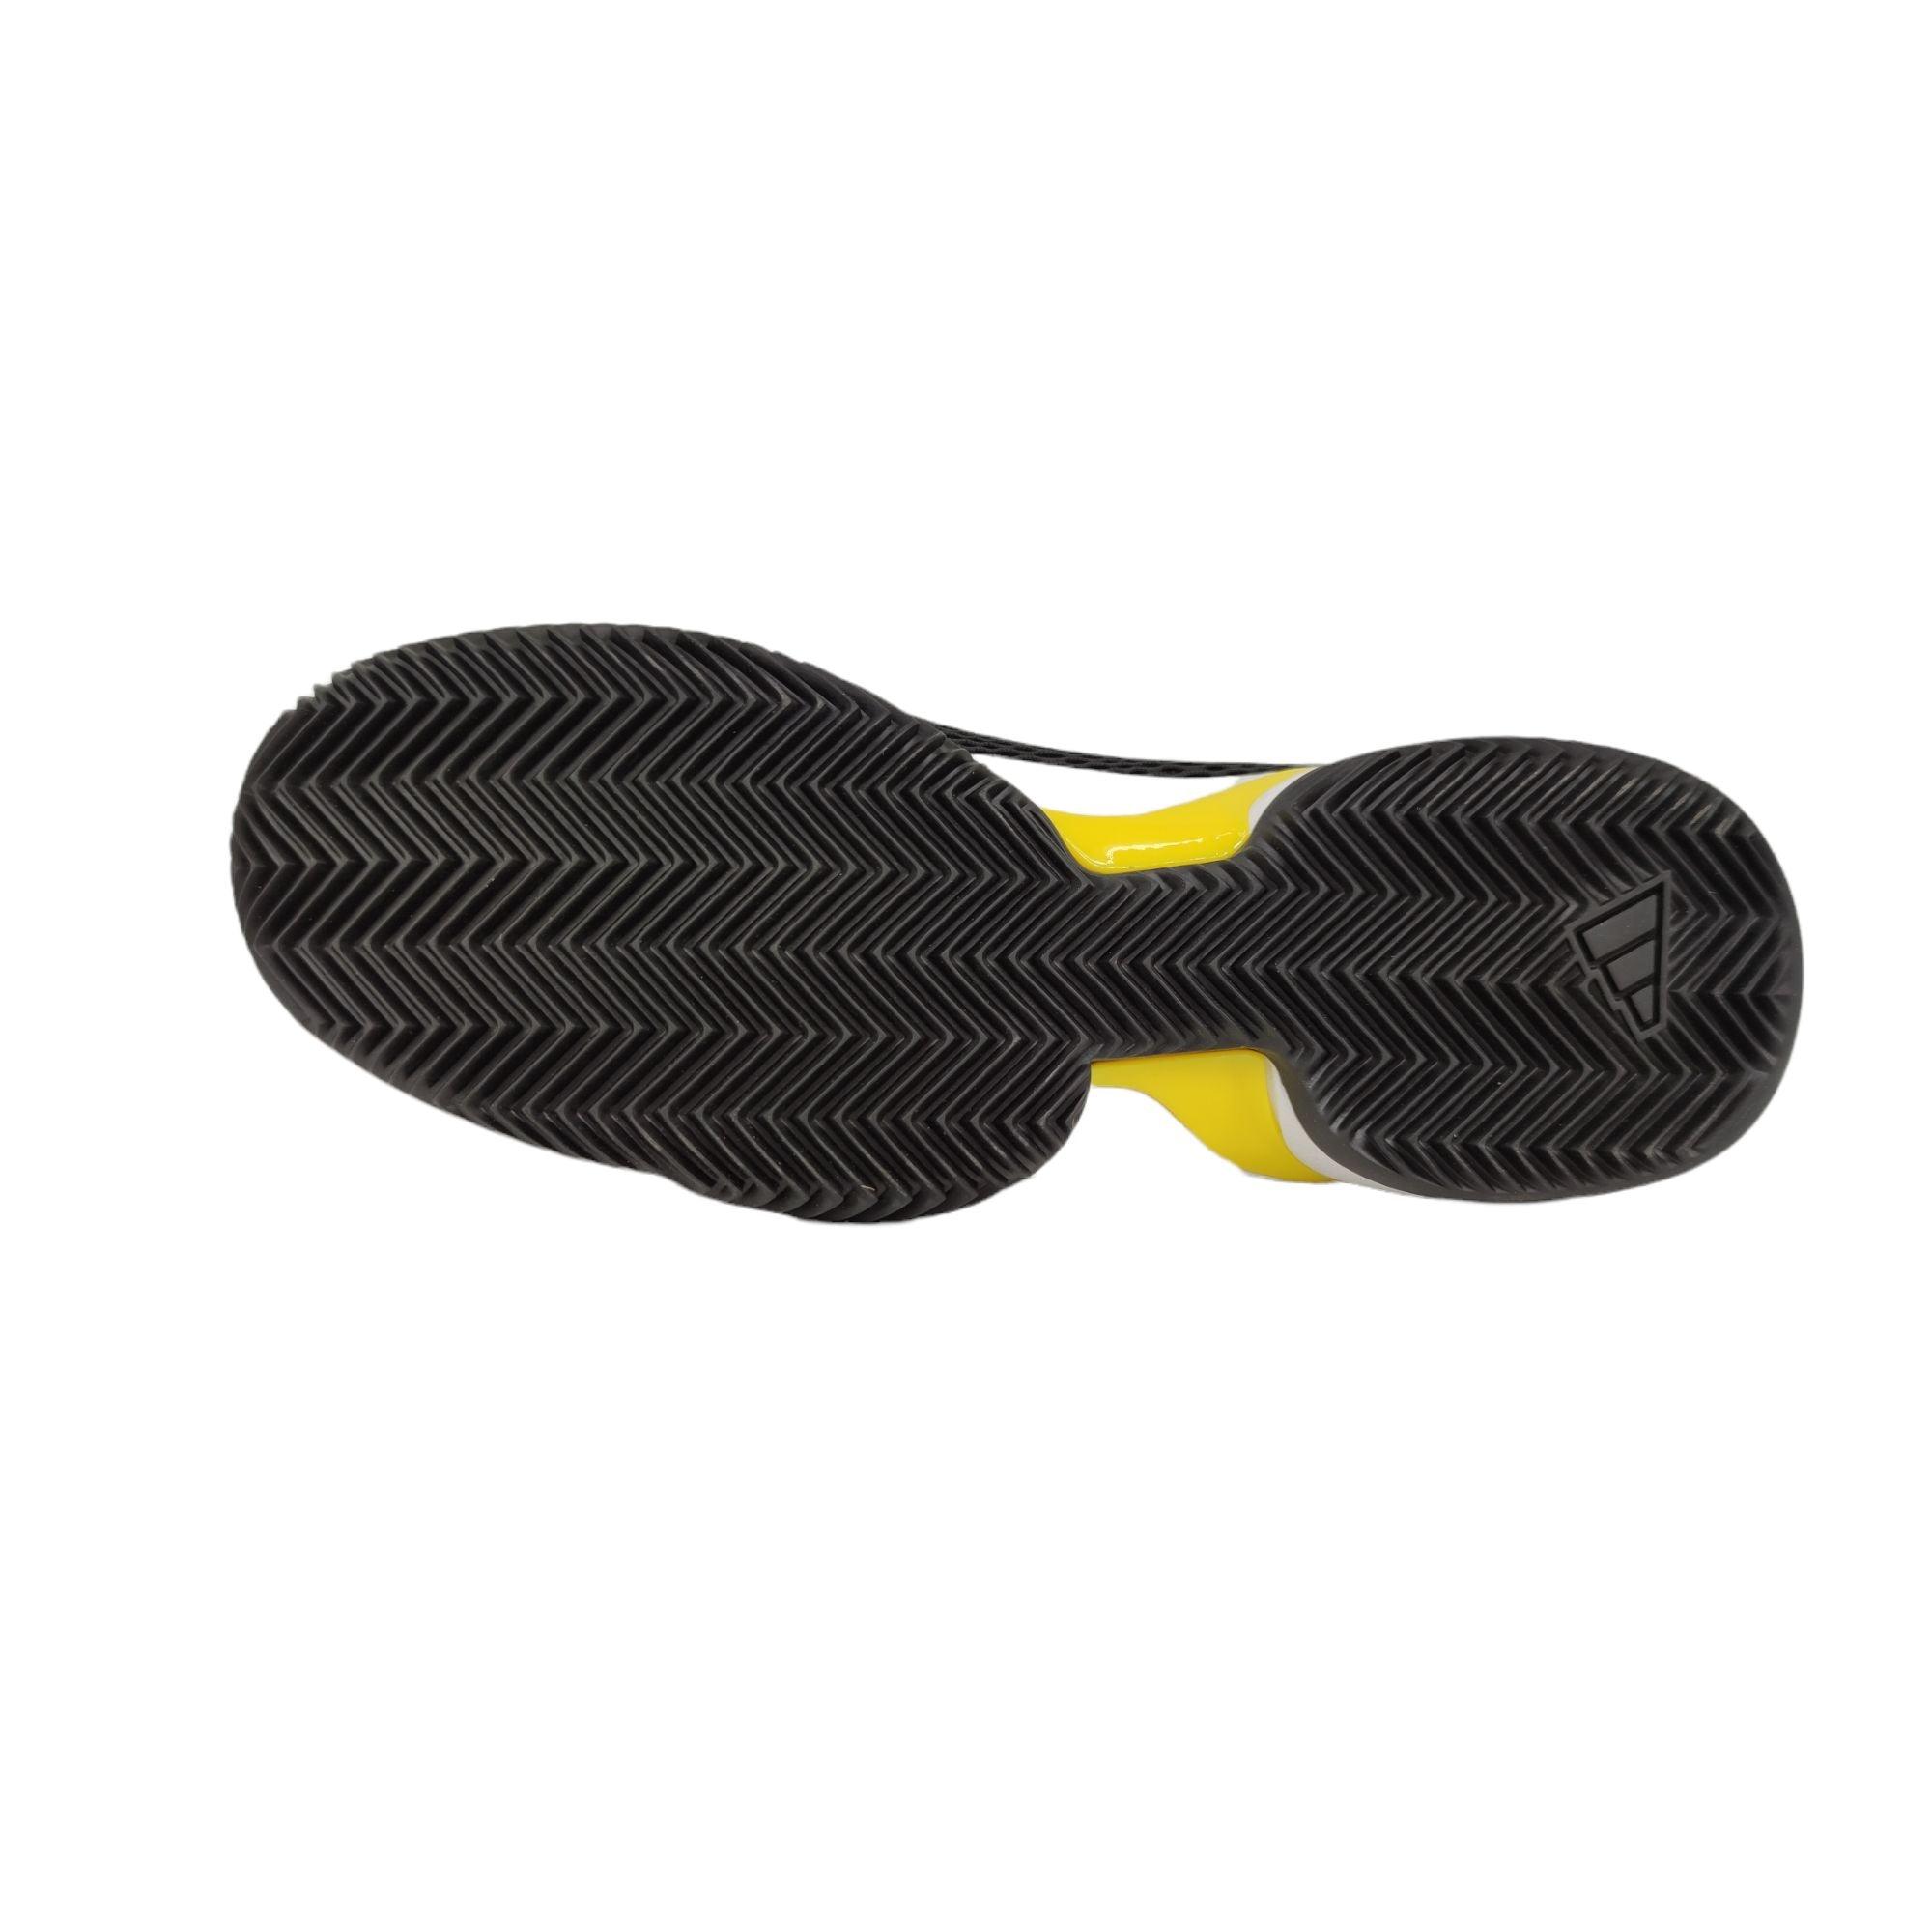 Adidas | Scarpe da Tennis Barricade Clay Junior Black/Green/Yellow - Fabbrica Ski Sises